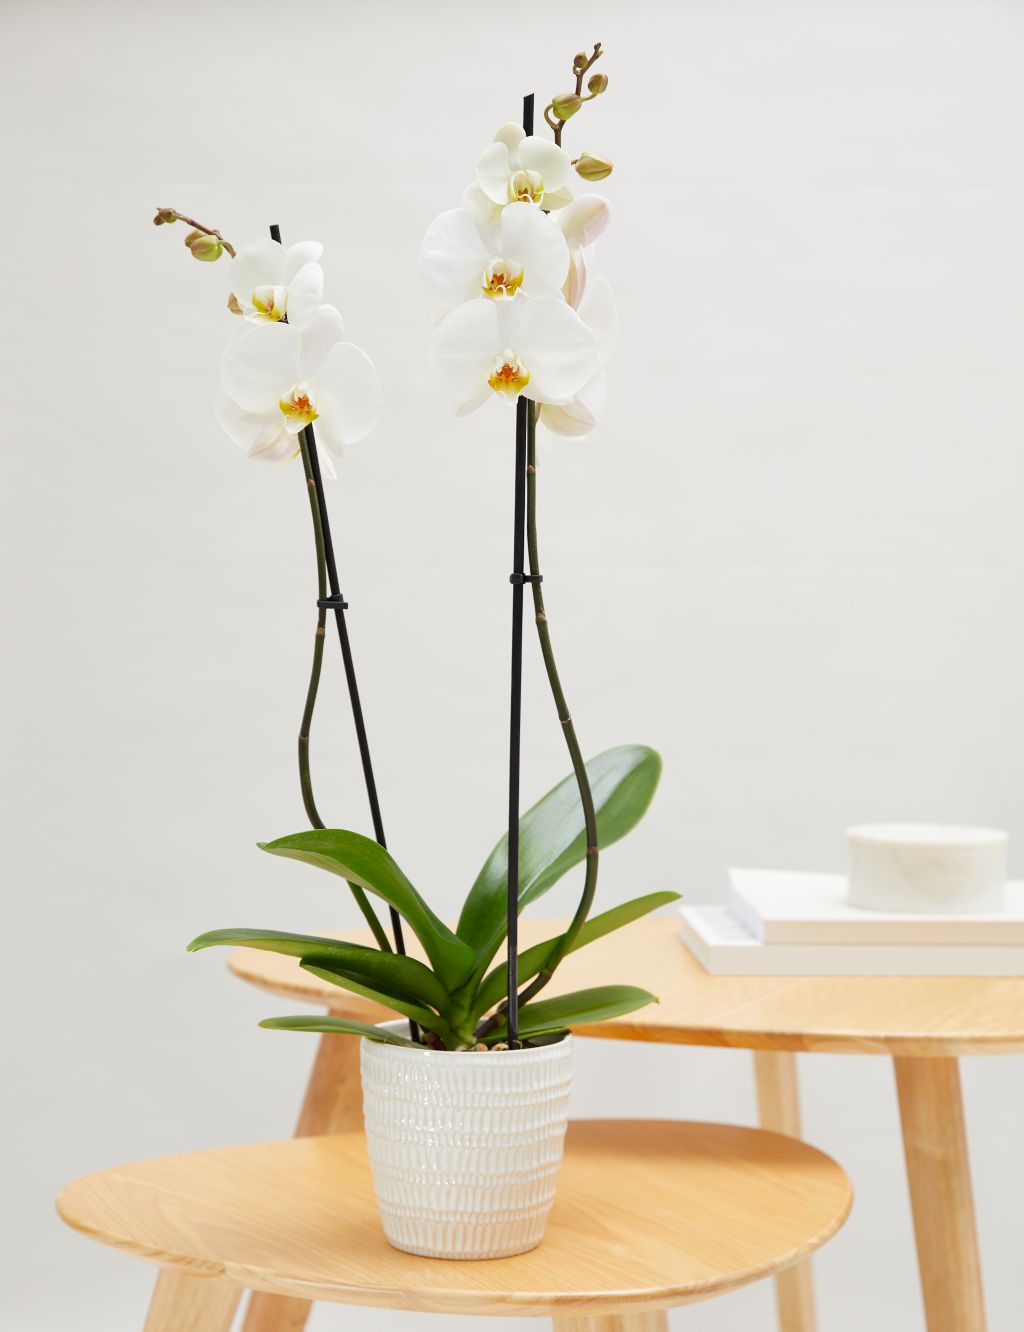 Large White Phalaenopsis Orchid in Ceramic Pot